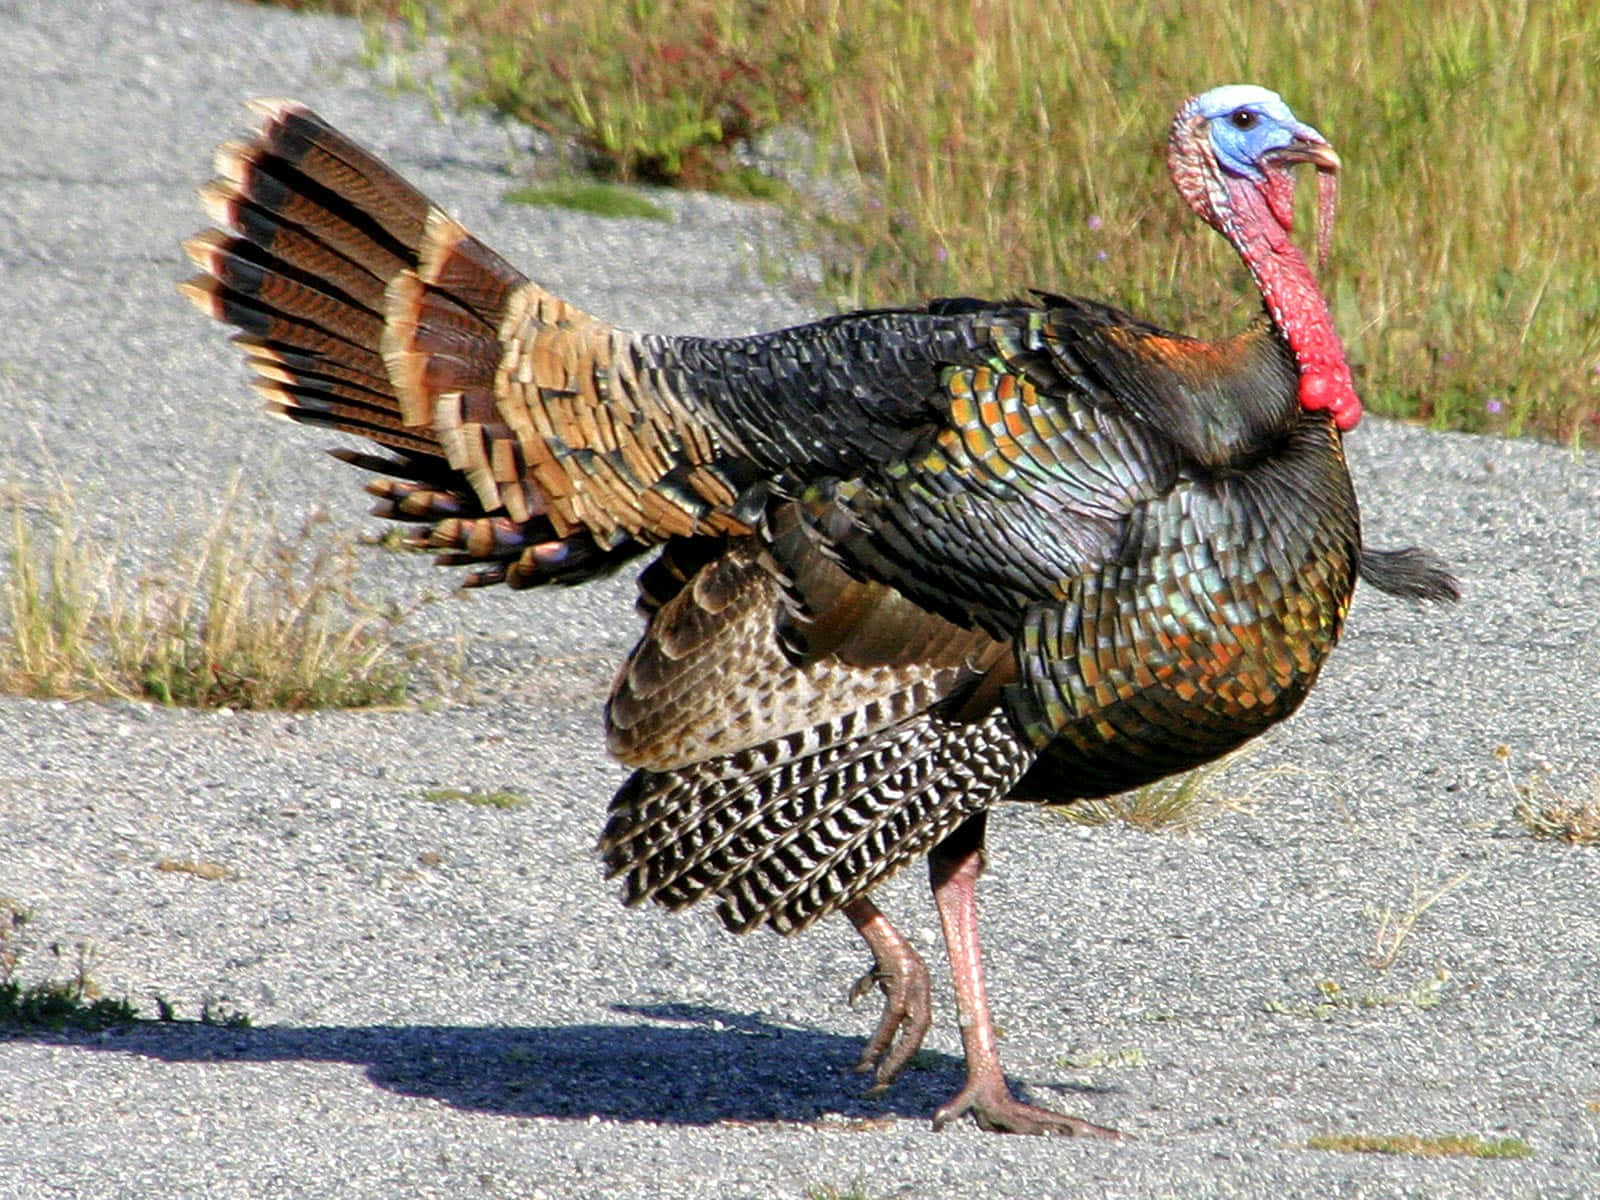 A Turkey Walking On The Road